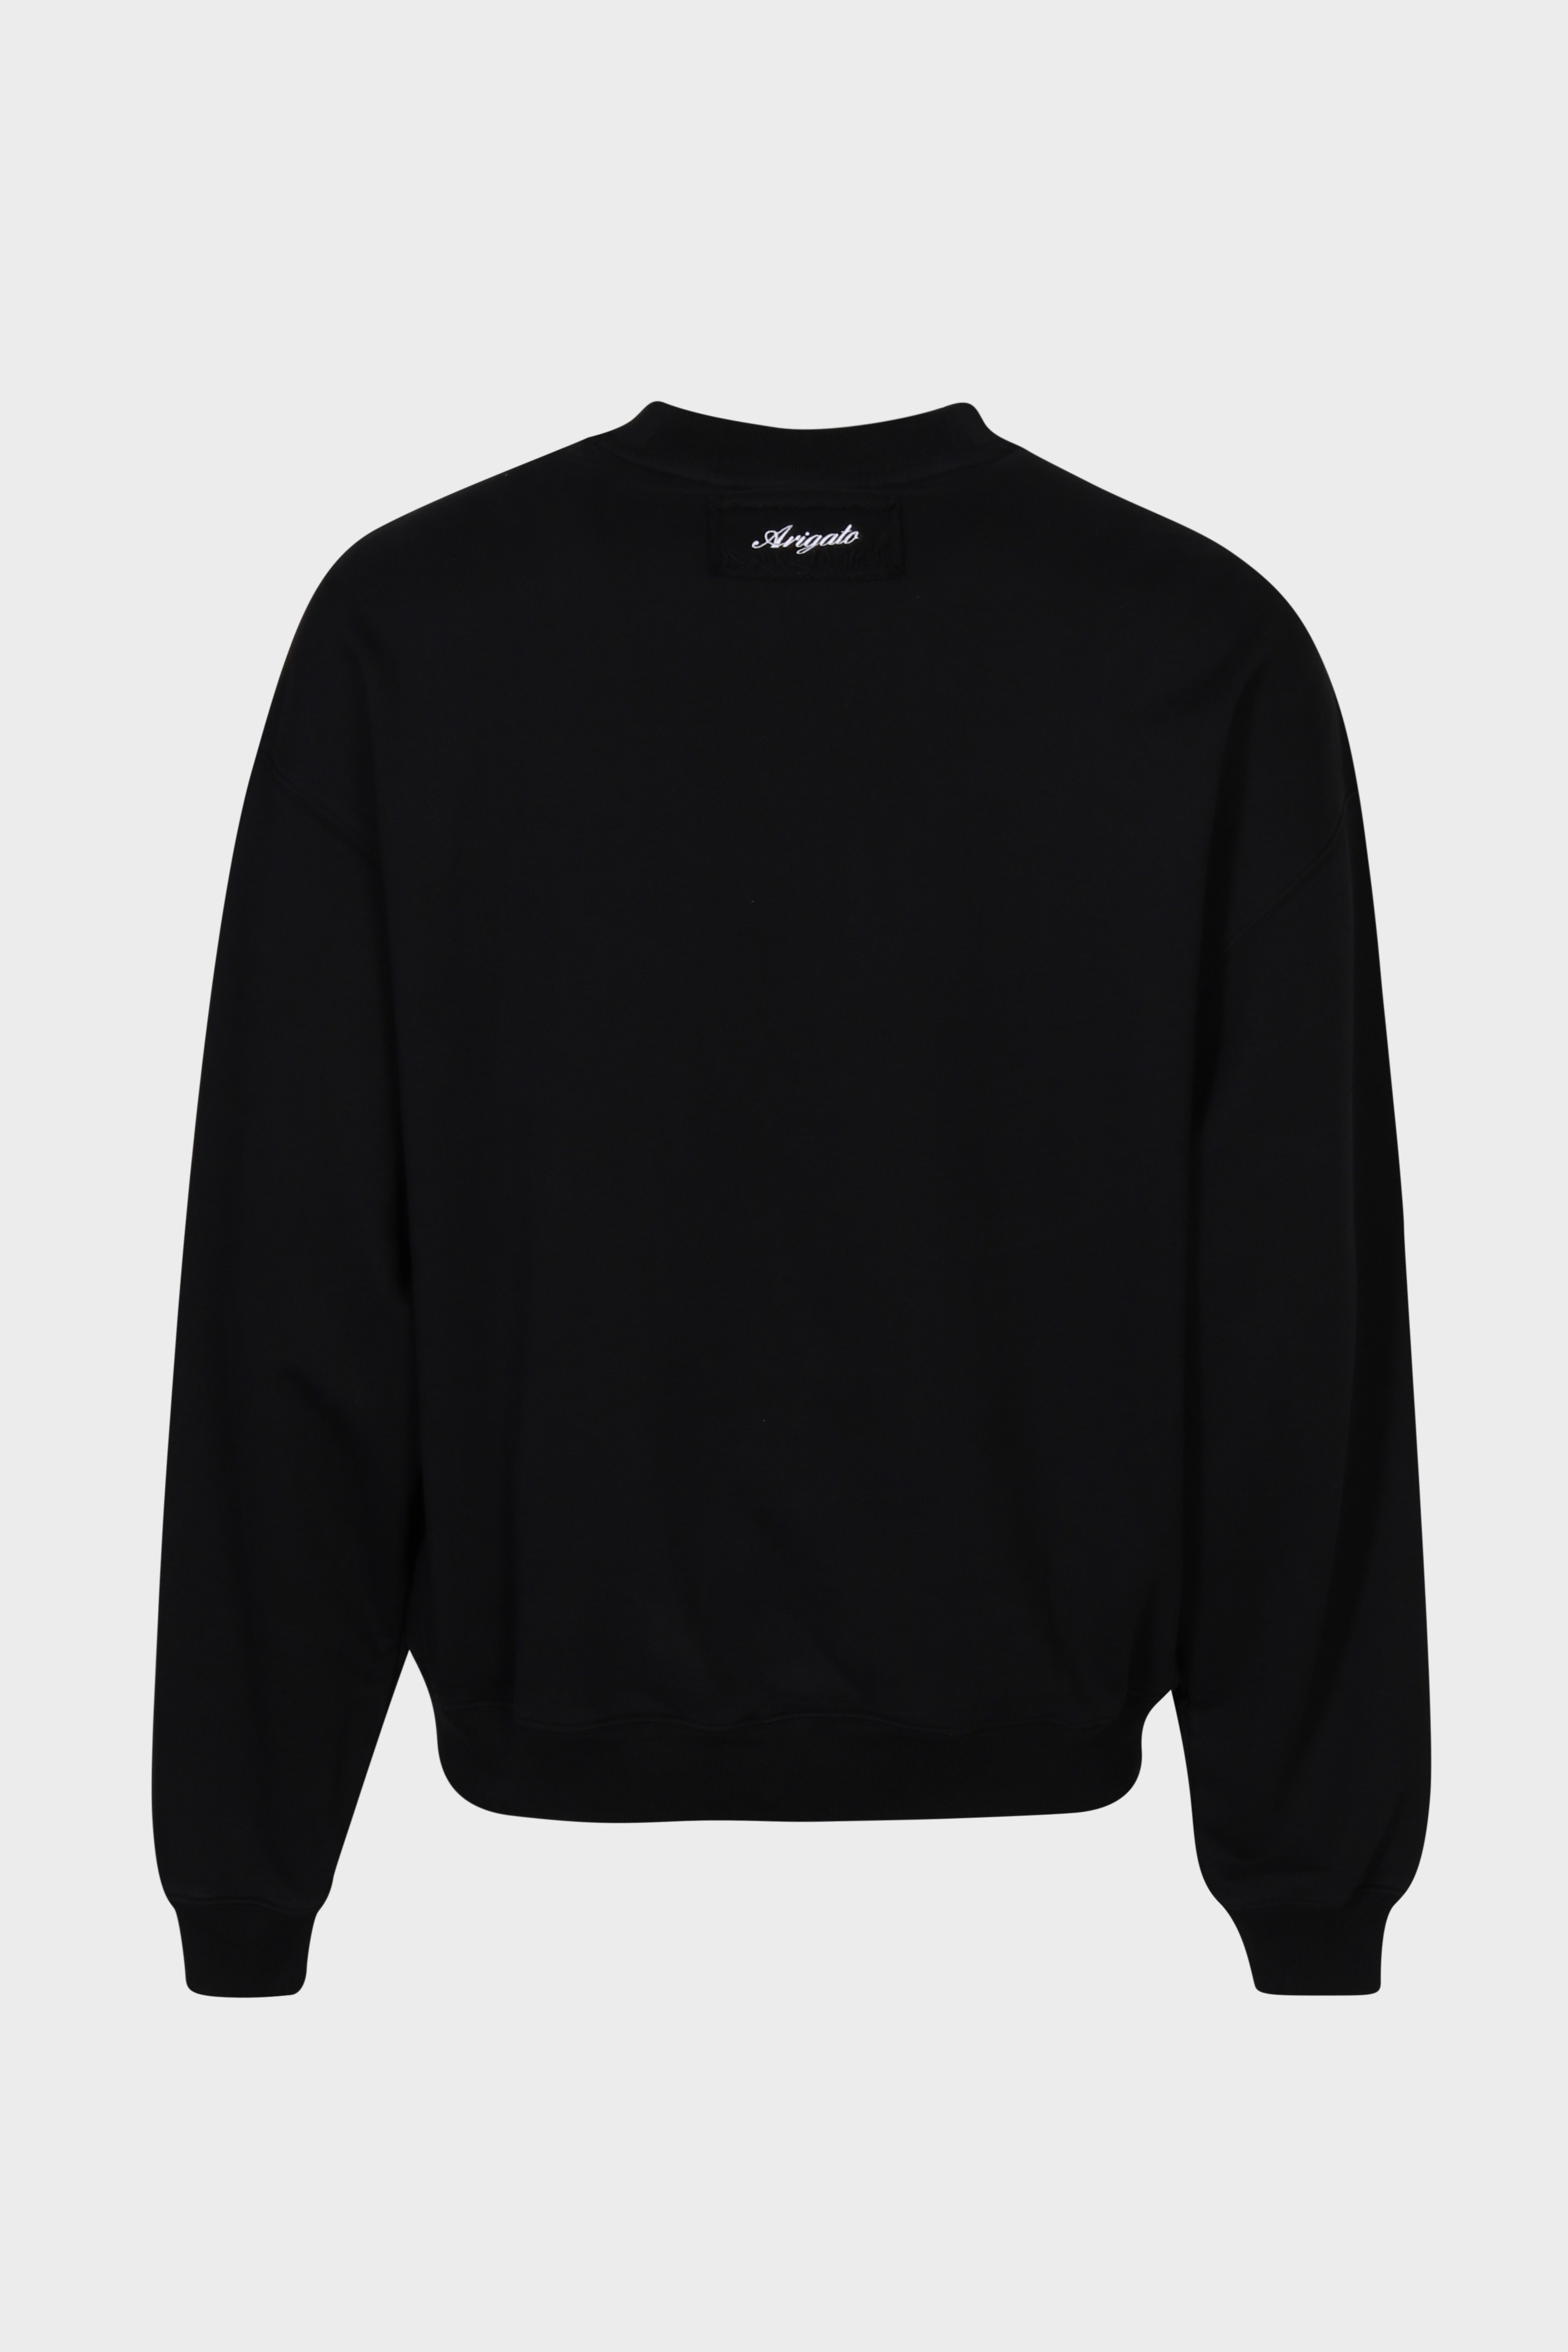 AXEL ARIGATO Vista Distressed Sweatshirt in Black M